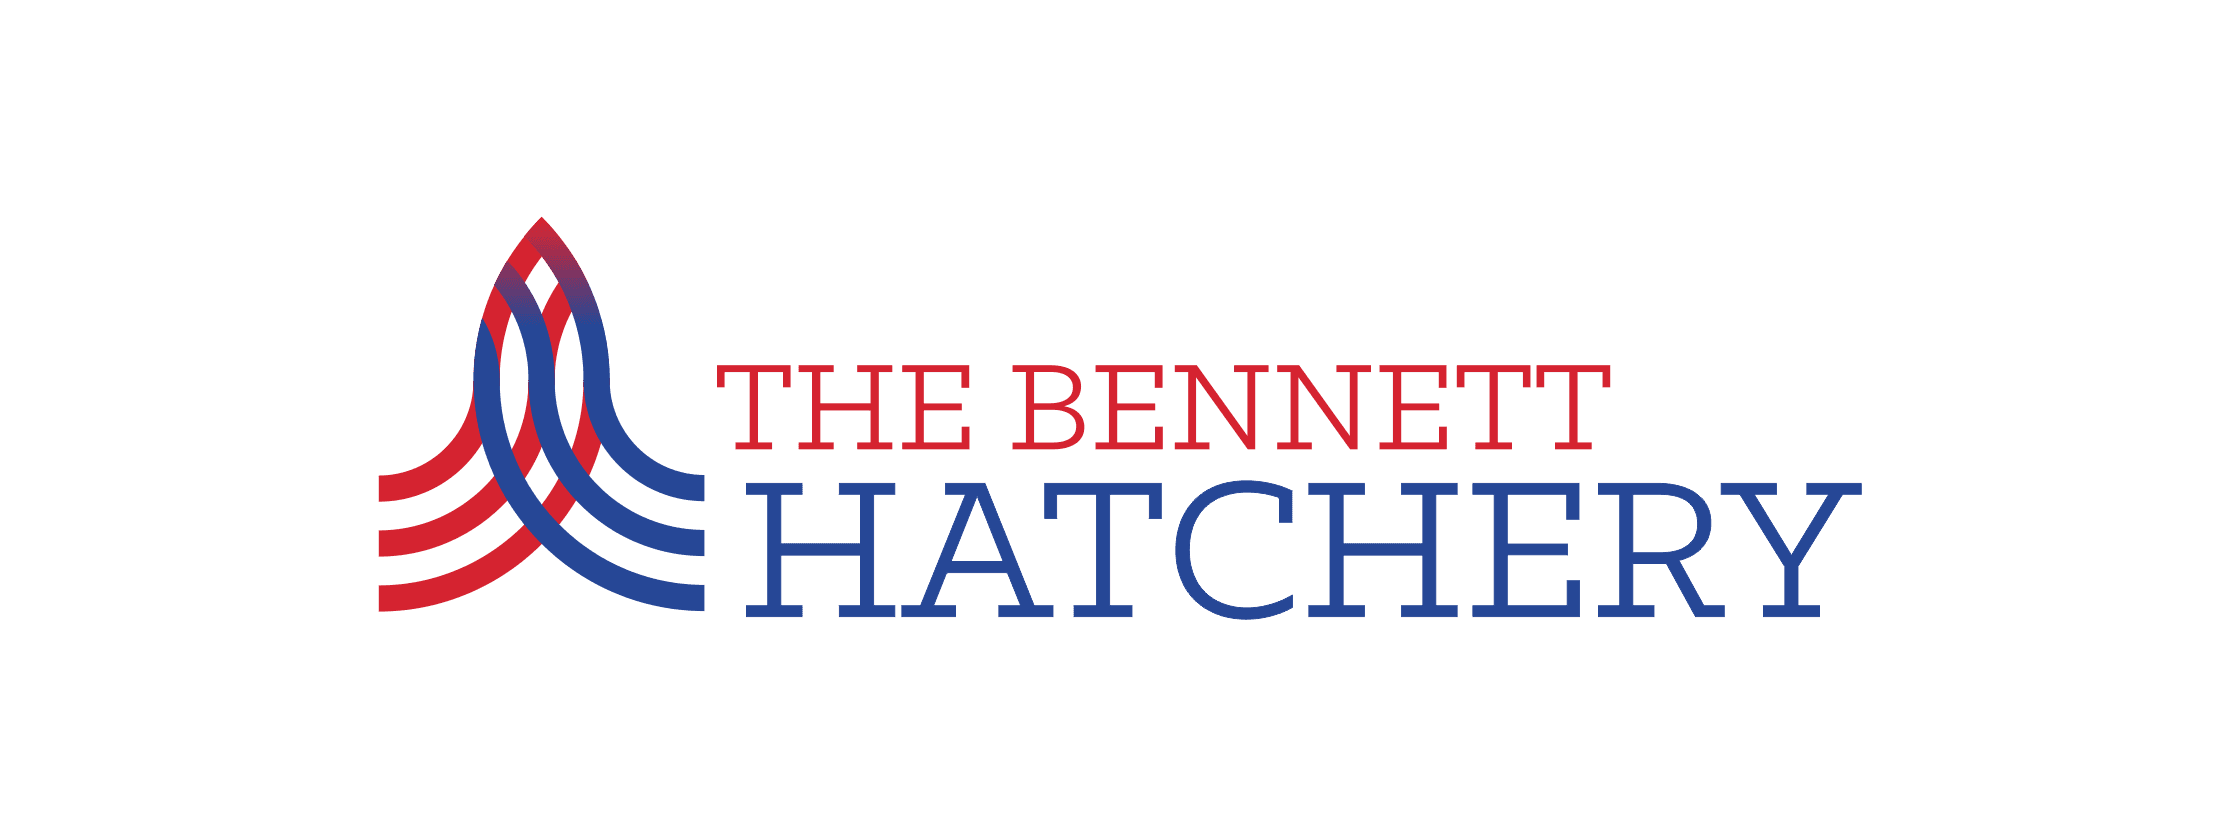 Hatchery logo.png